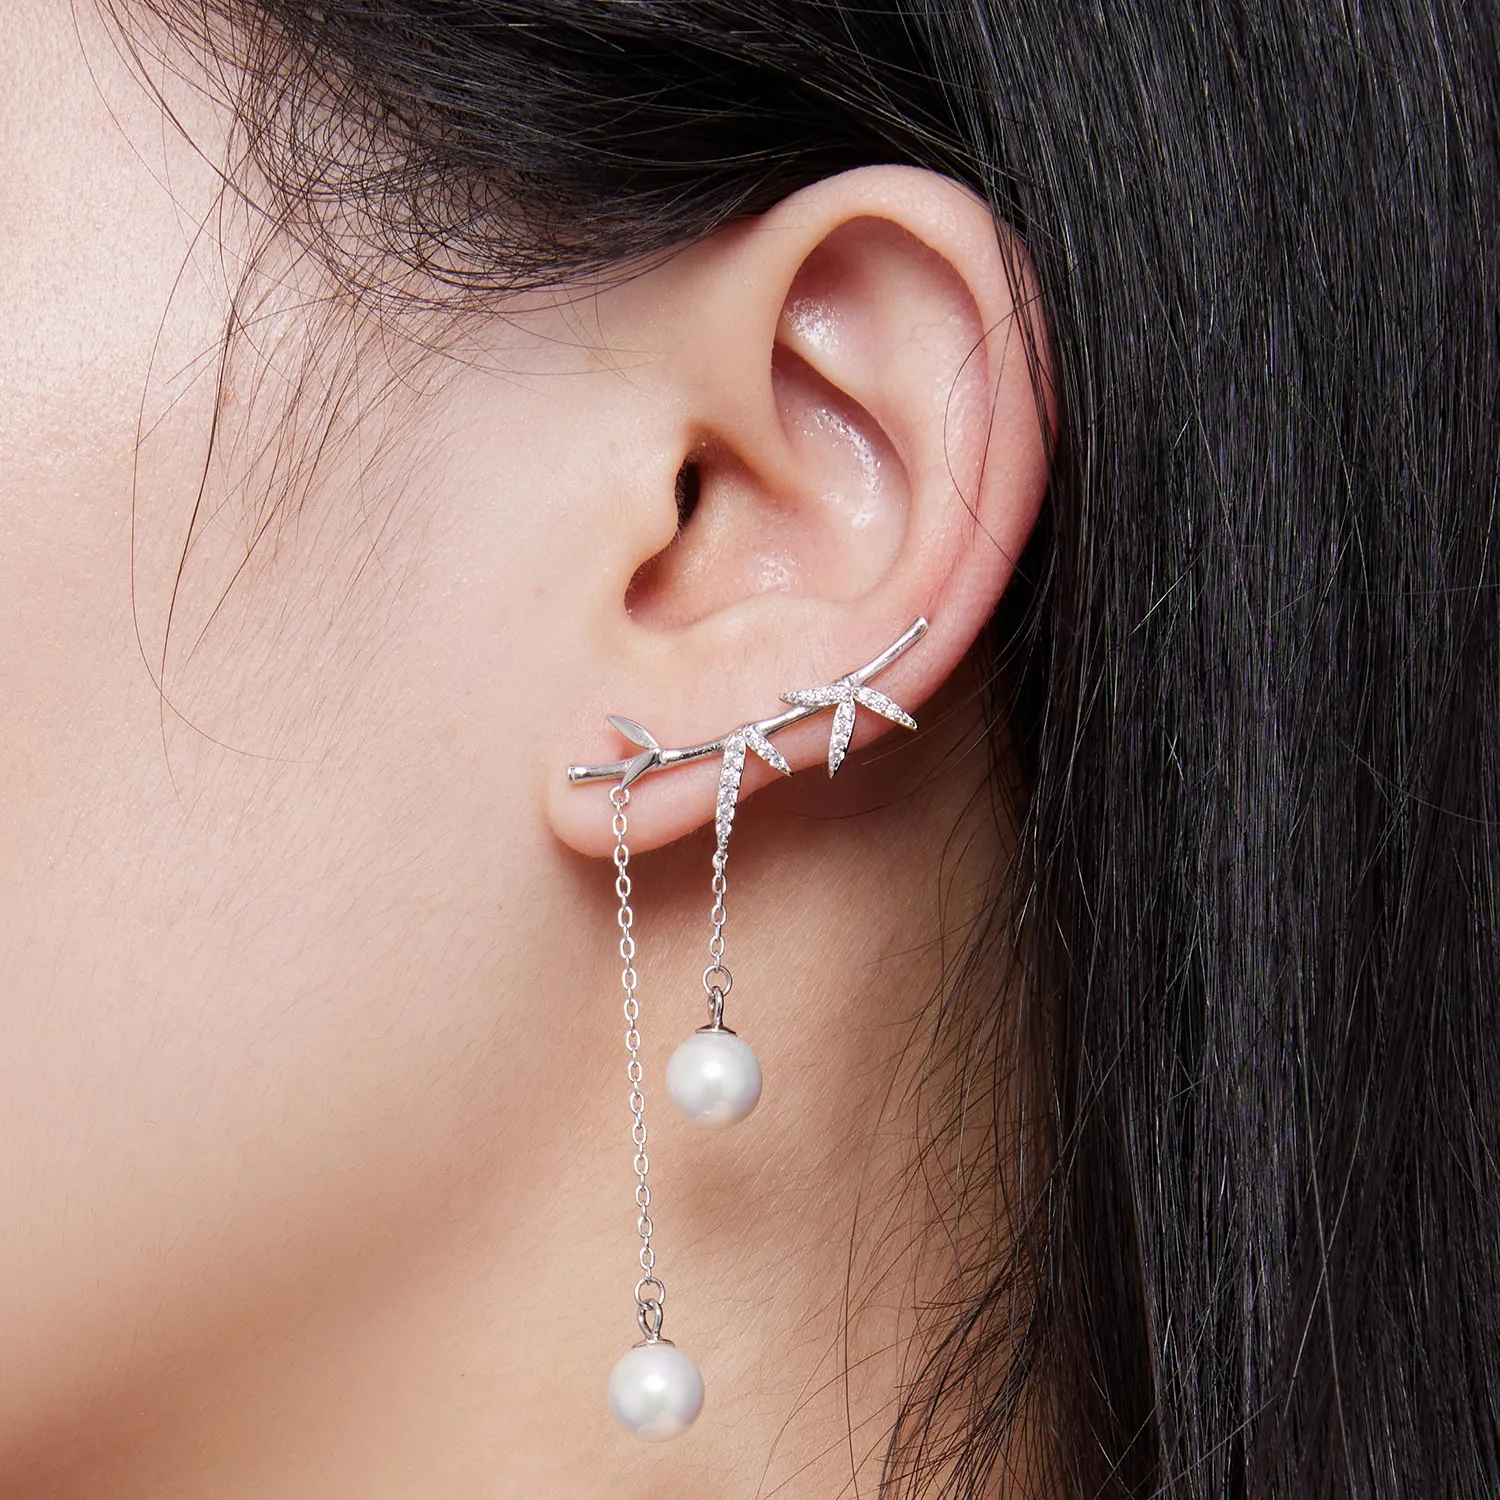 Pandora Style Delicate Bamboo Shell Beads Dangle Earrings - BSE821